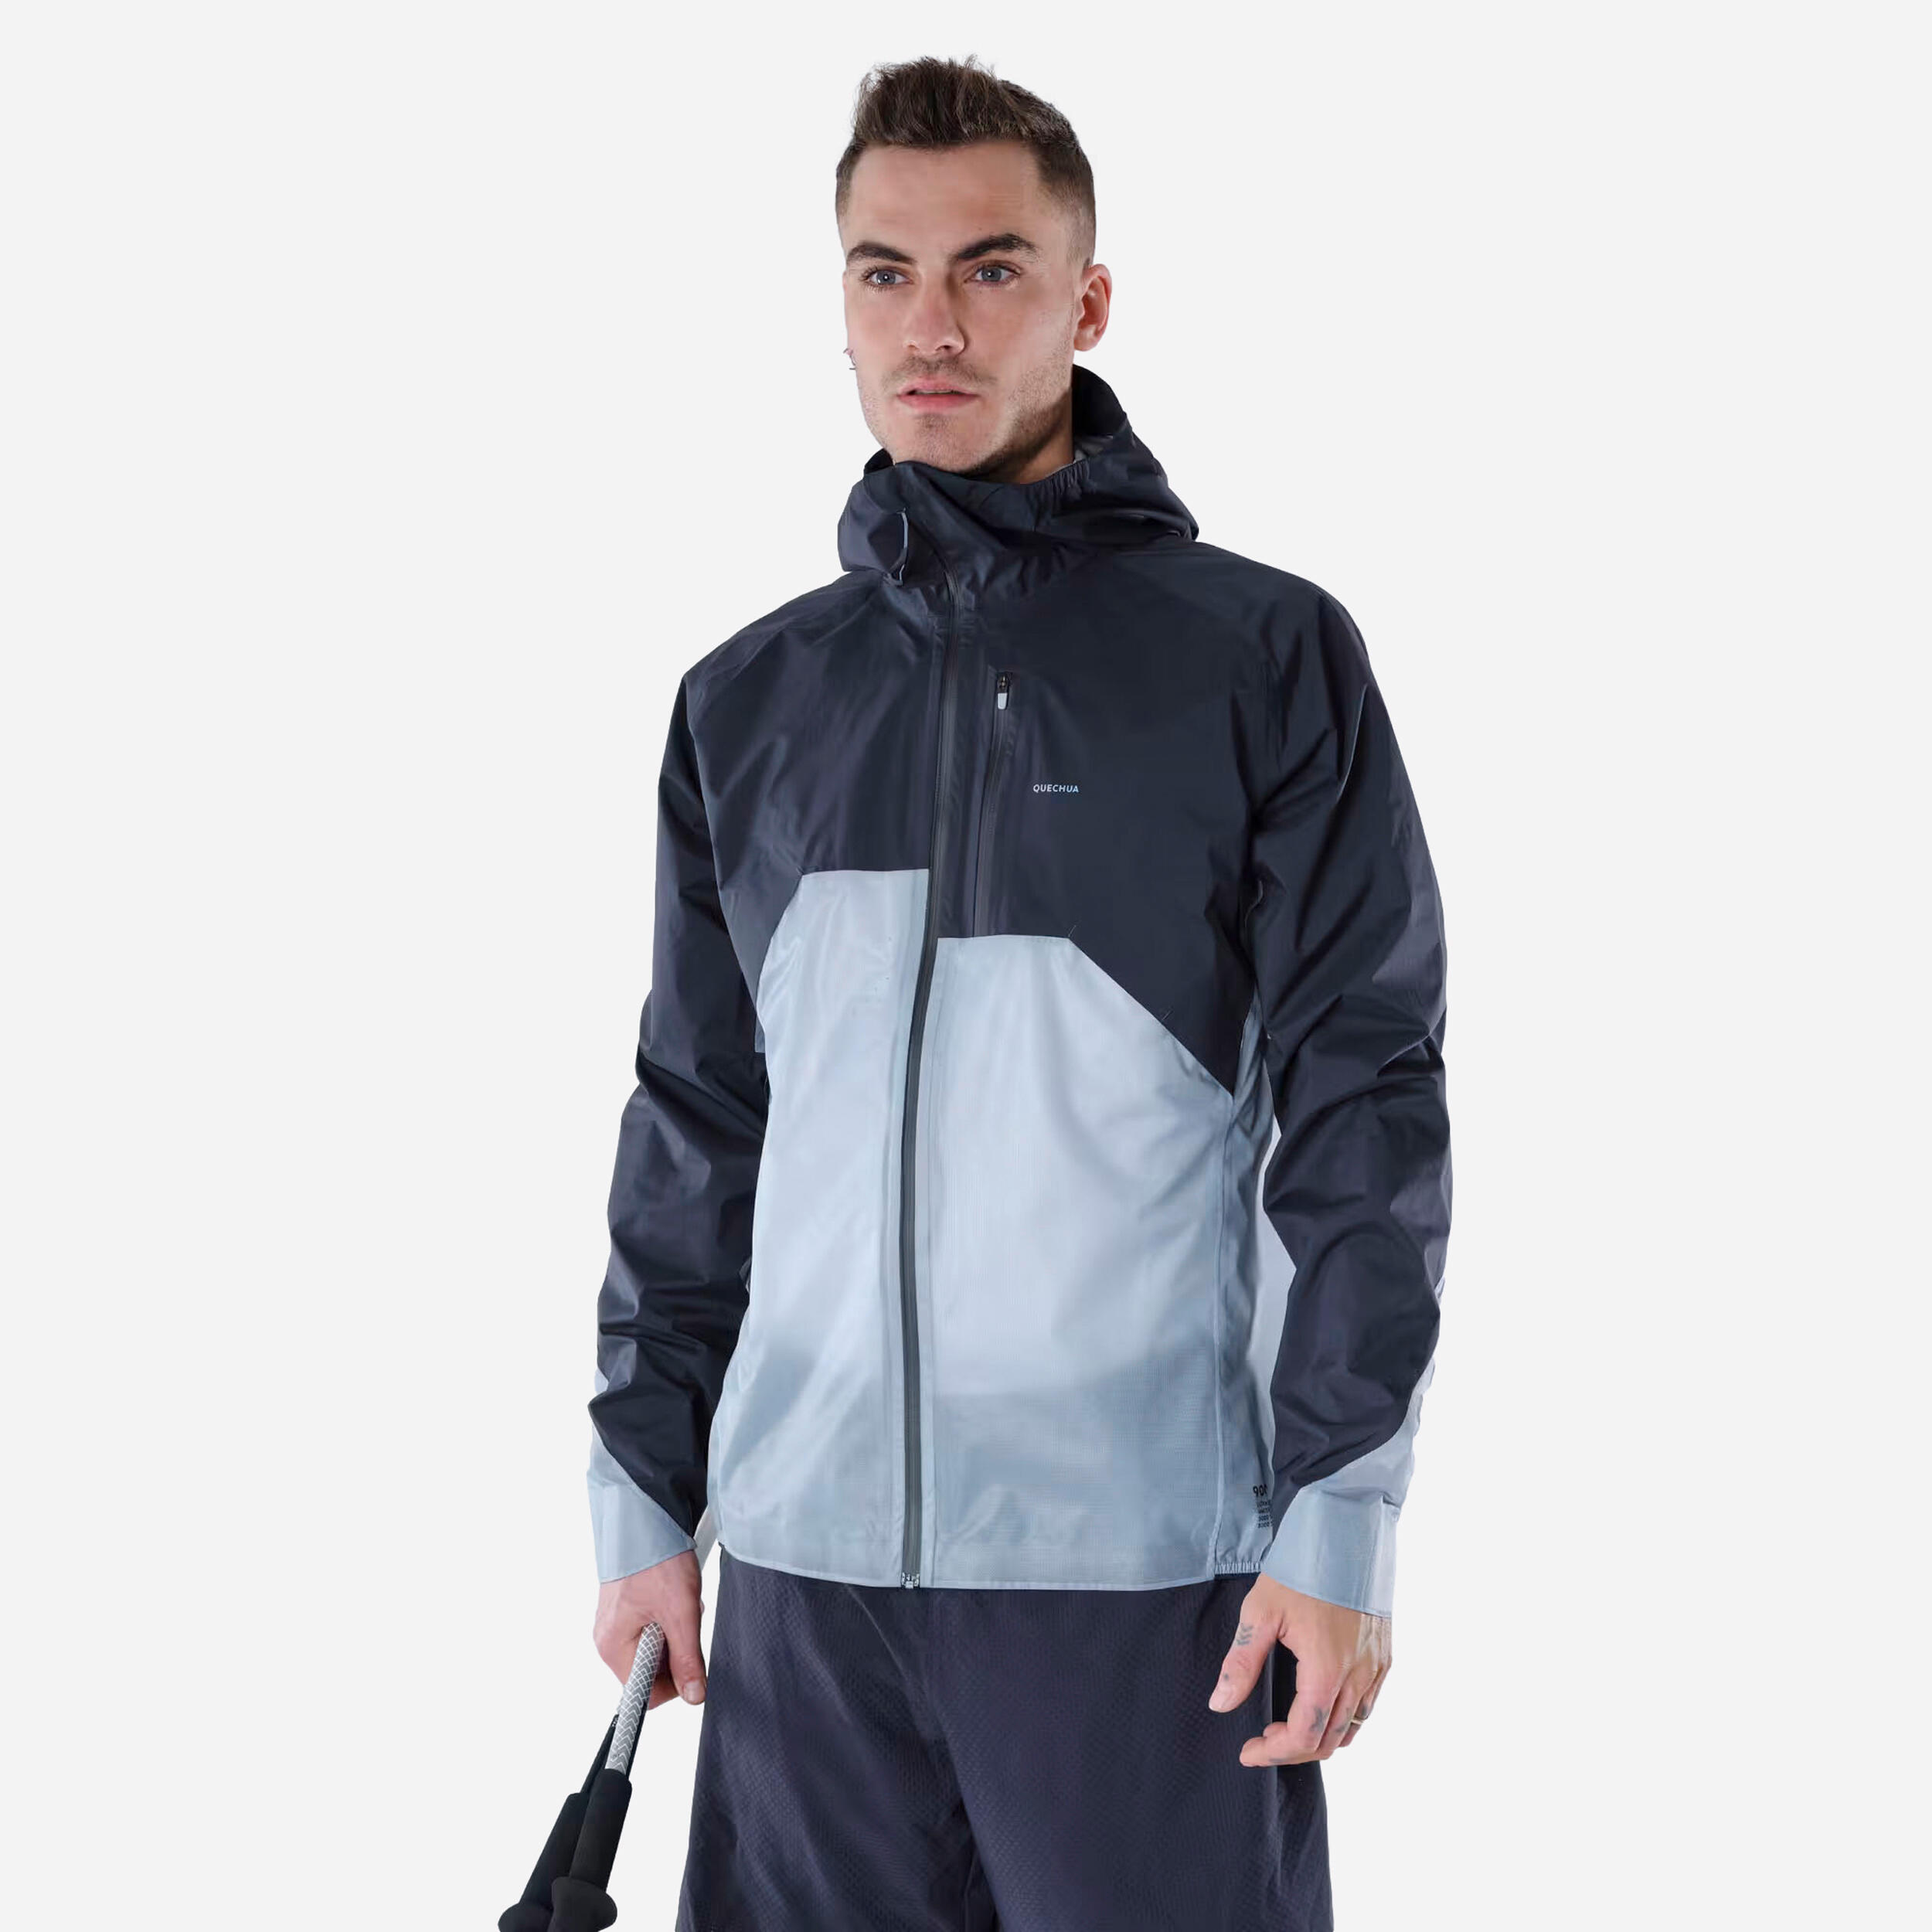 Tribord decathlon rain jacket - Gem